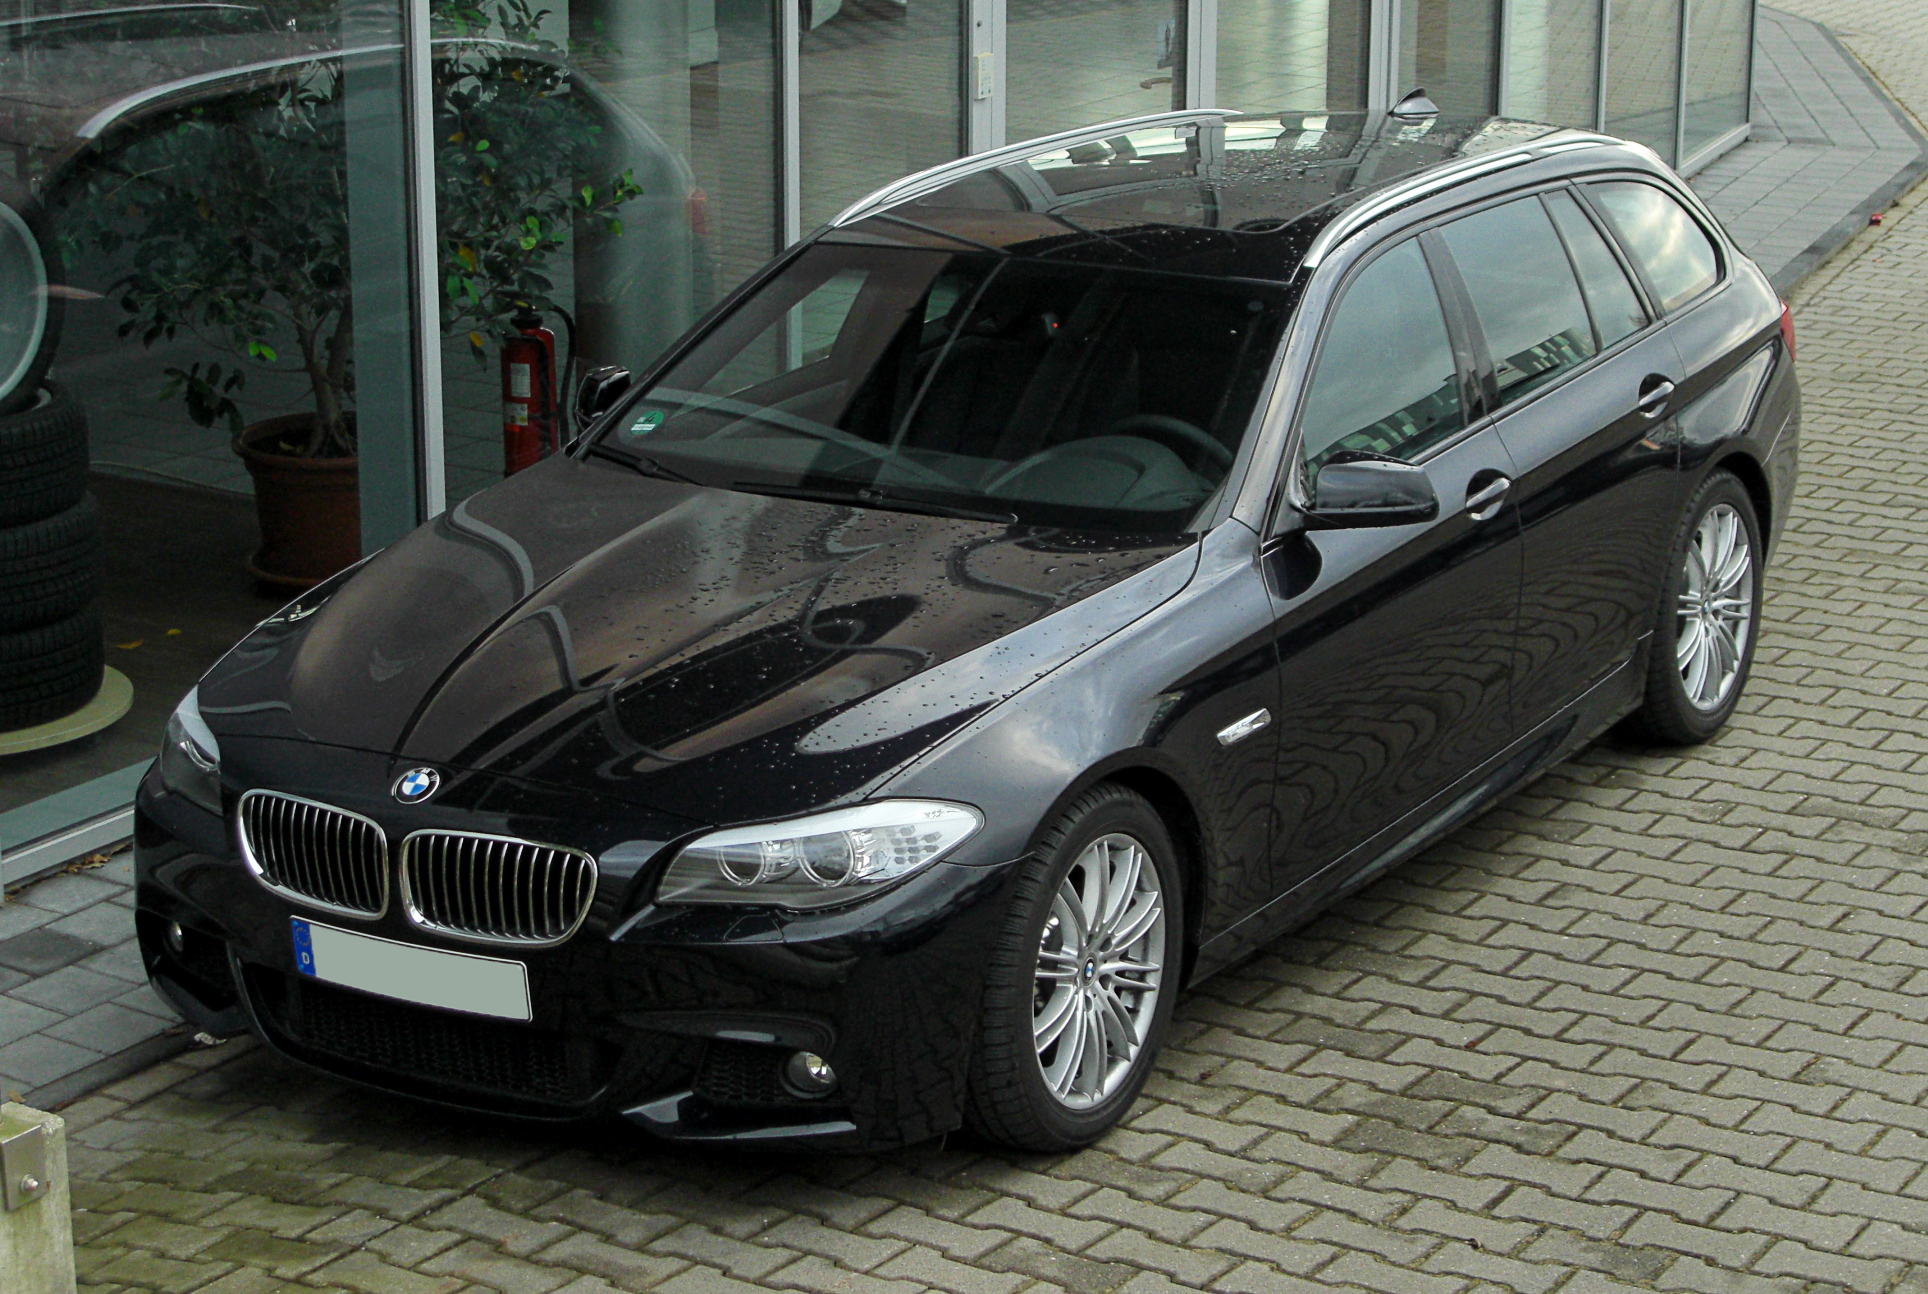 morfine Picasso merknaam File:BMW 520d Touring M-Sportpaket (F11) – Frontansicht, 31. März 2011,  Mettmann.jpg - Wikimedia Commons